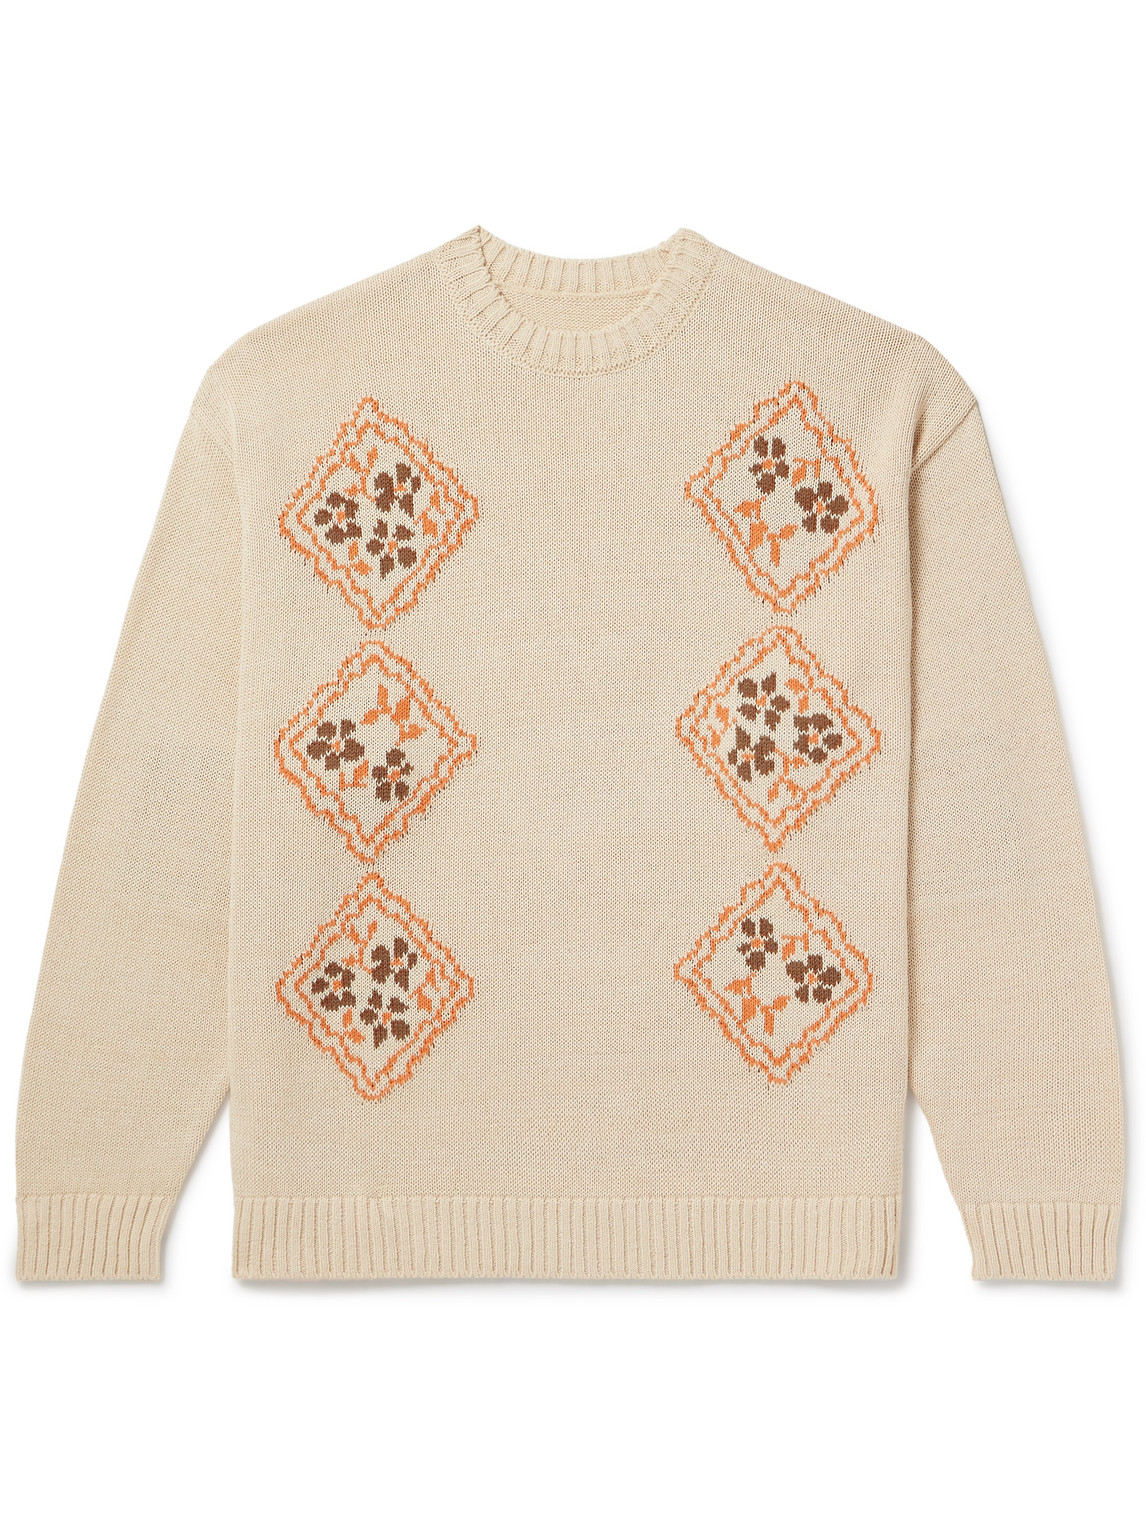 Kookei Jacquard-Knitted Cotton-Blend Sweater